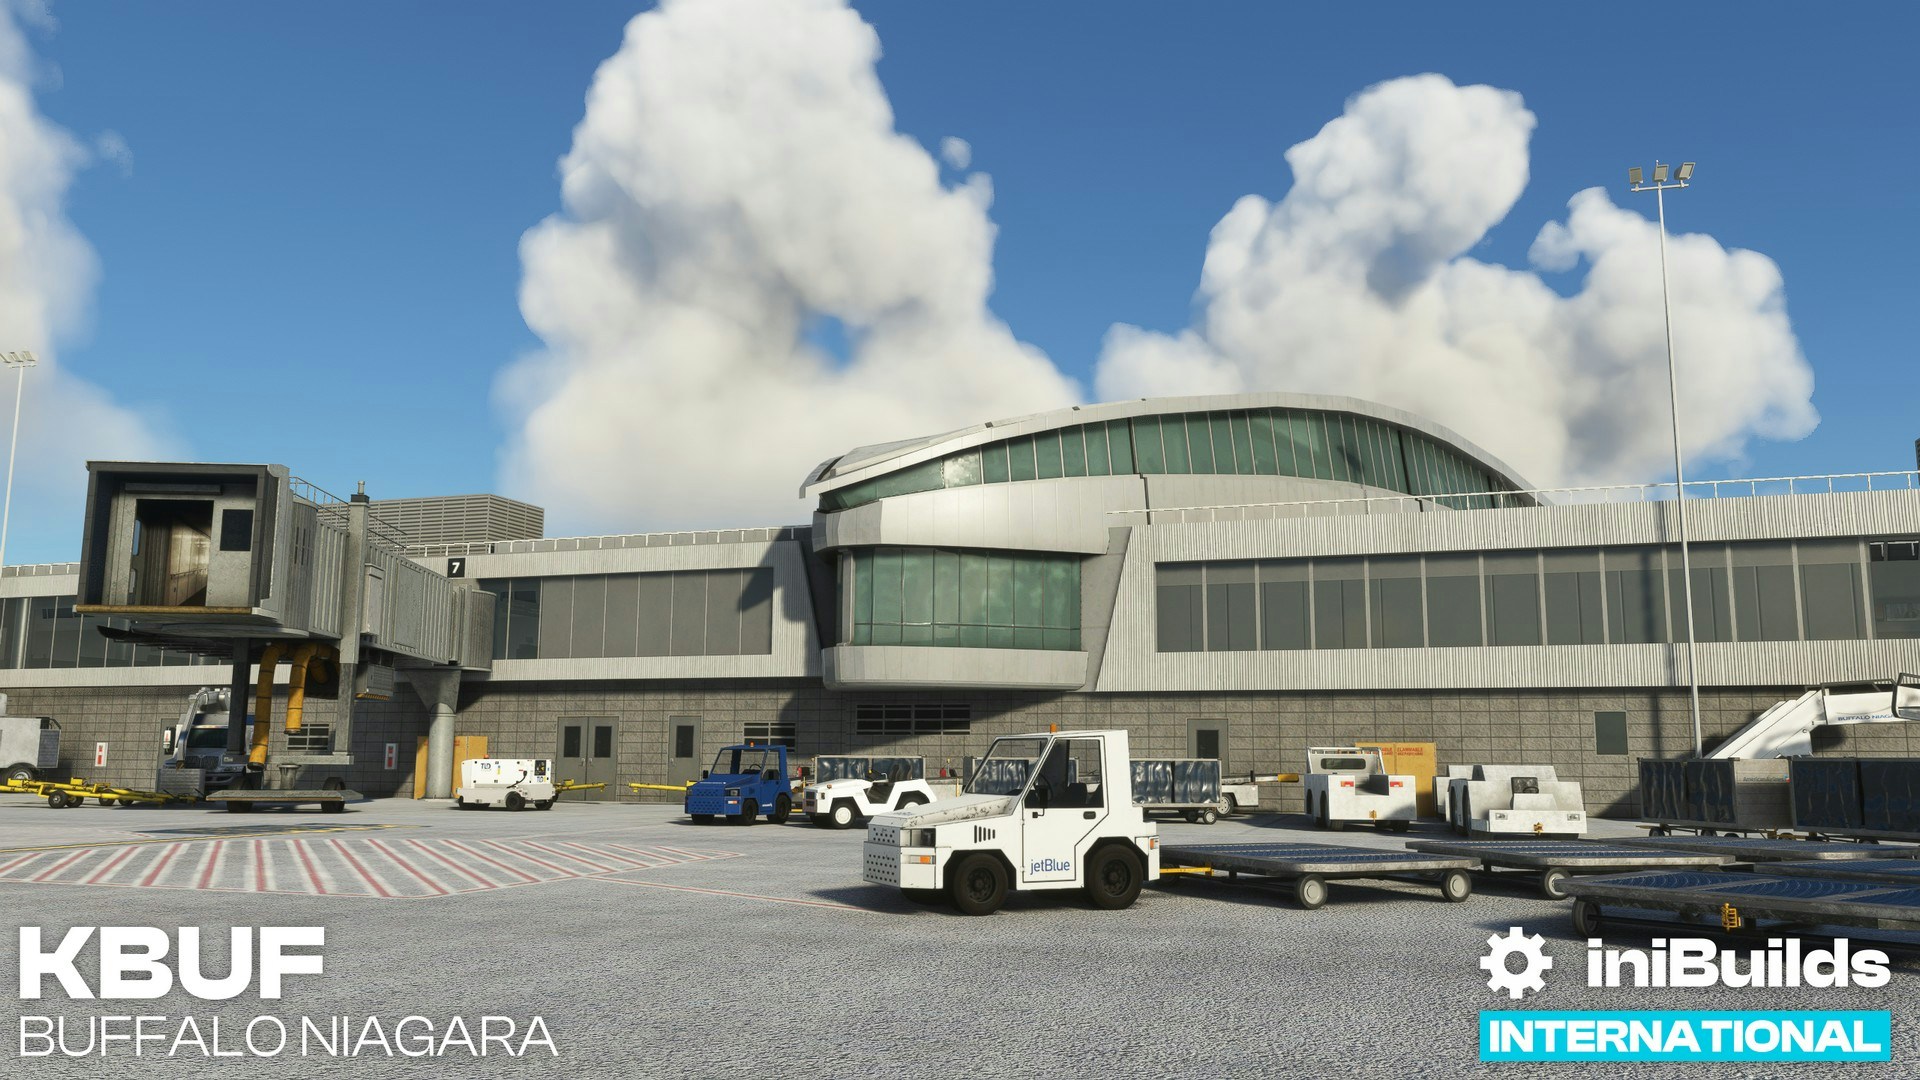 iniScene Releases Buffalo Niagara Airport for MSFS